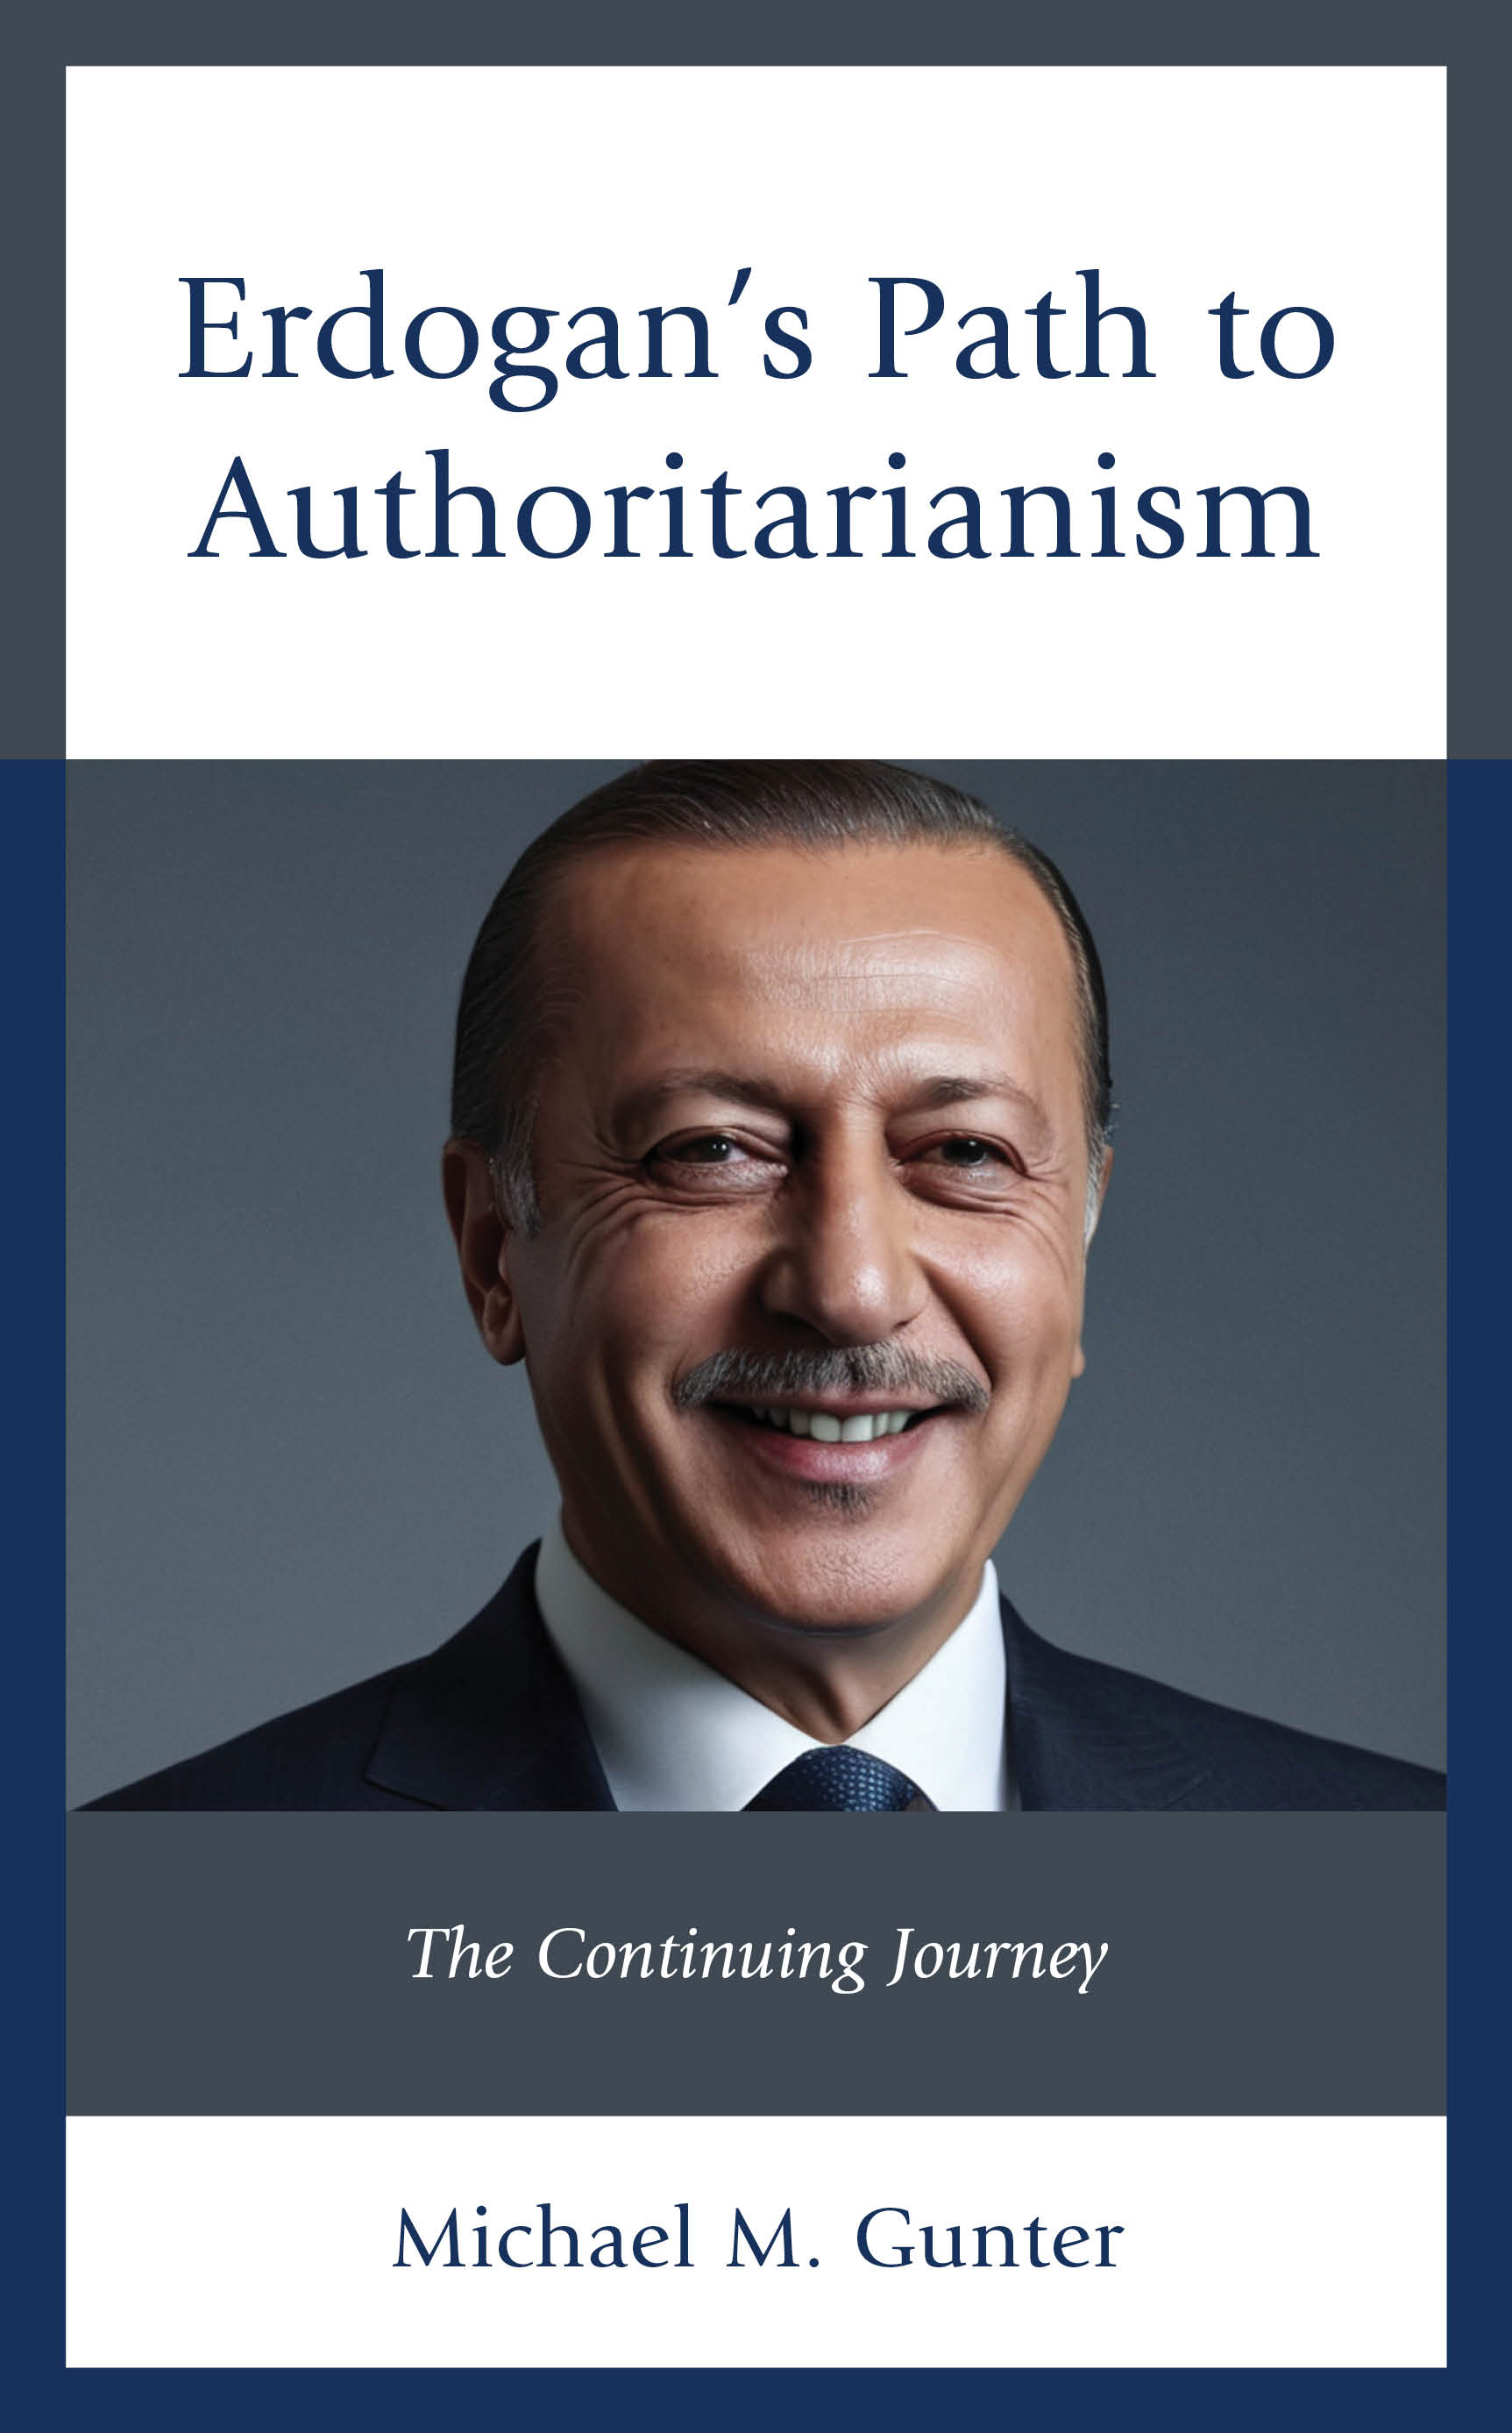 Erdogan's Path to Authoritarianism: The Continuing Journey